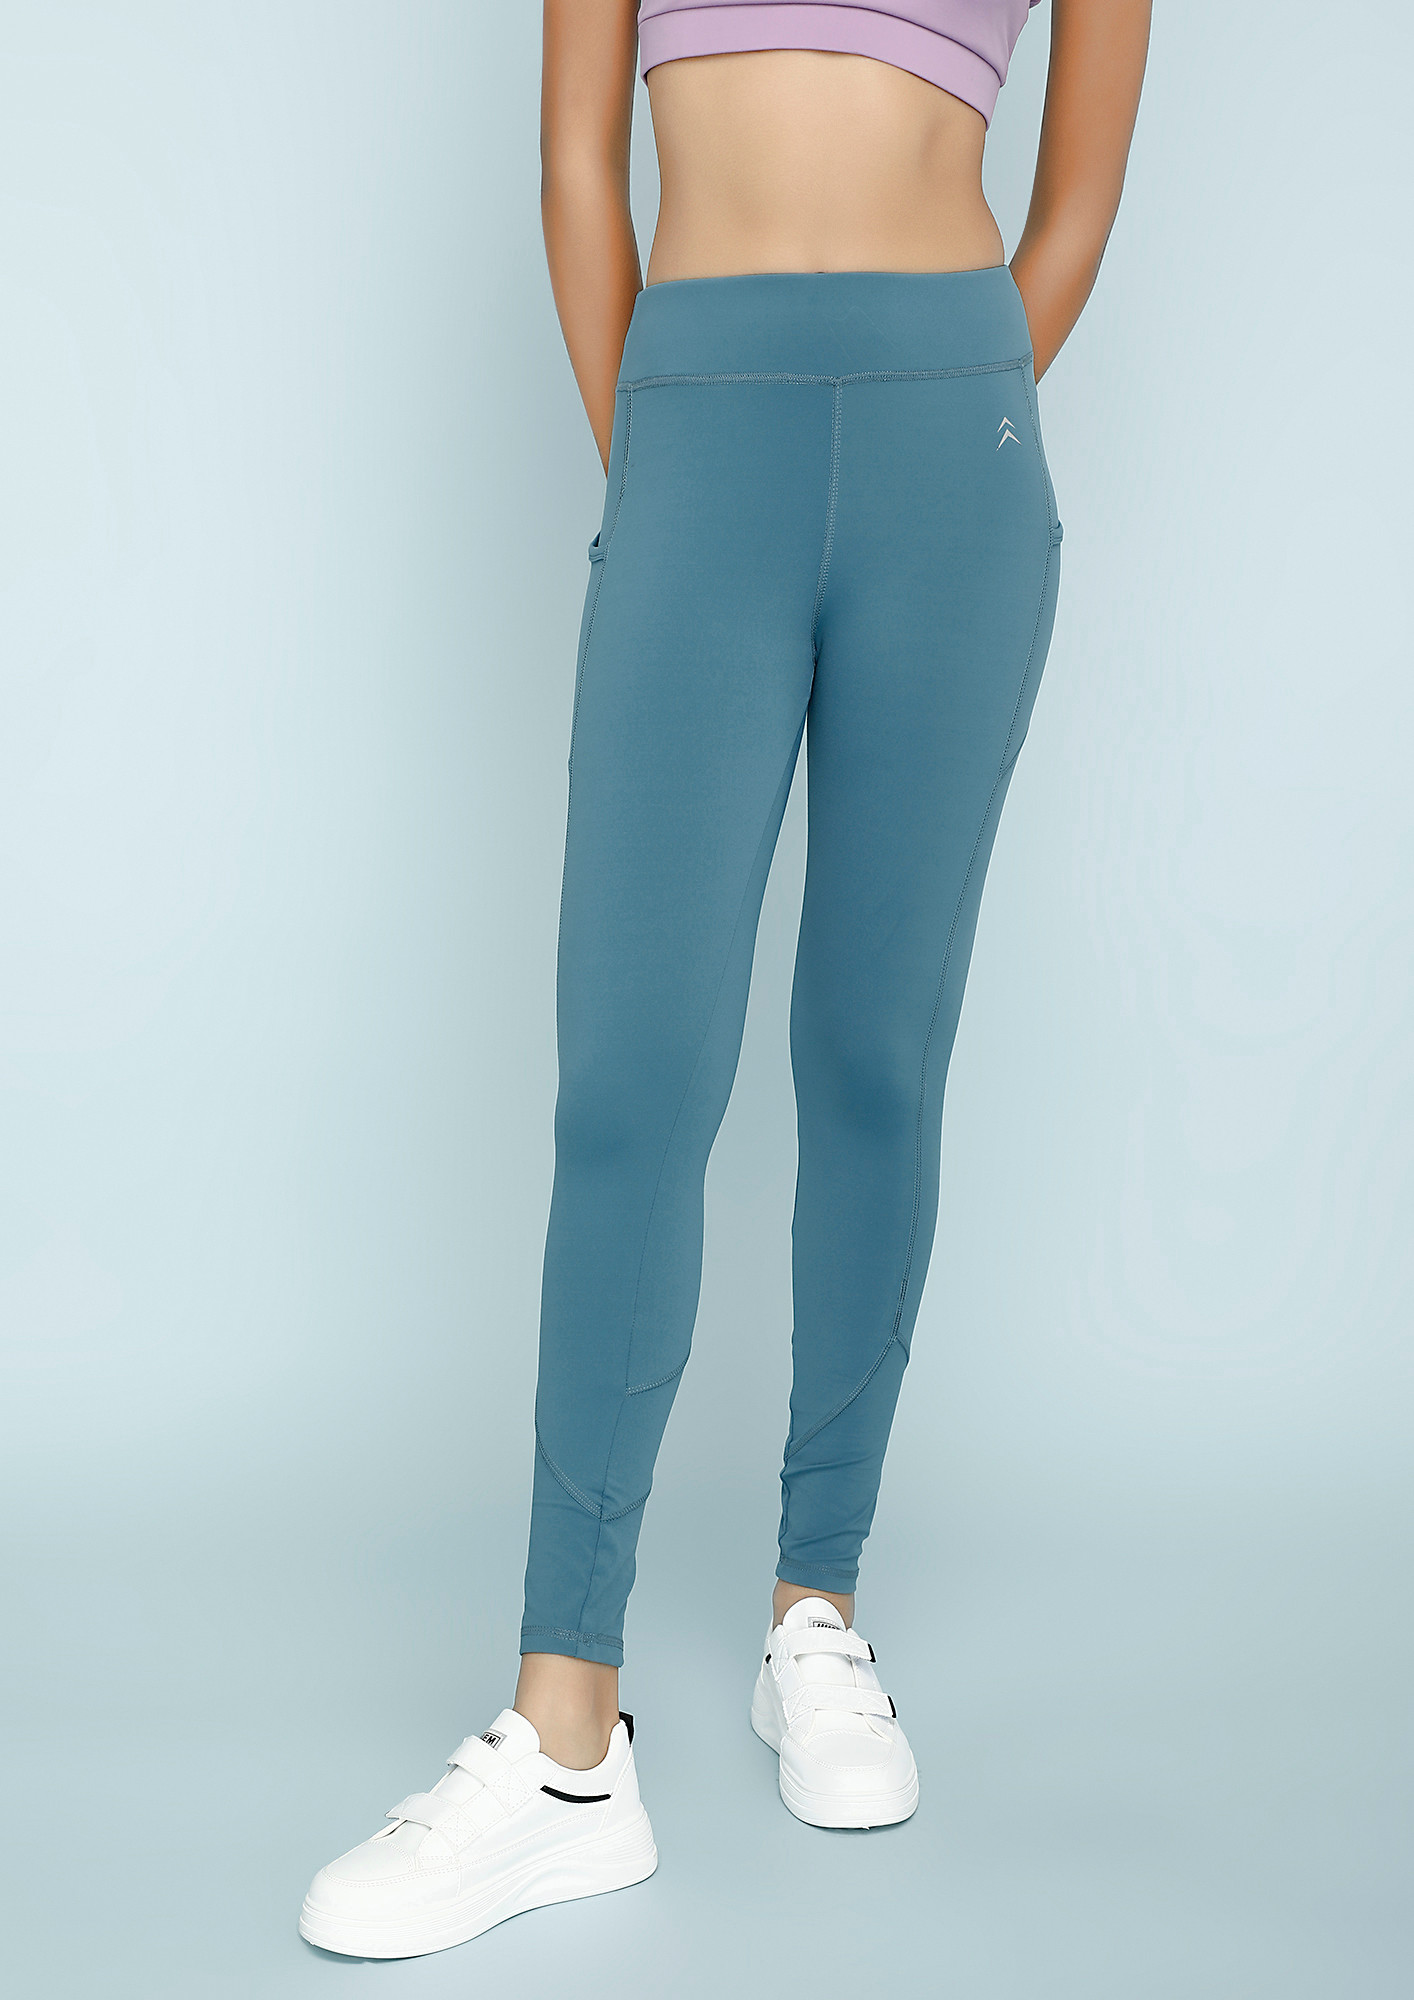 Ombre Teal leggings Women, Gradient Blue Turquoise Green Tie Dye Yoga –  Starcove Fashion